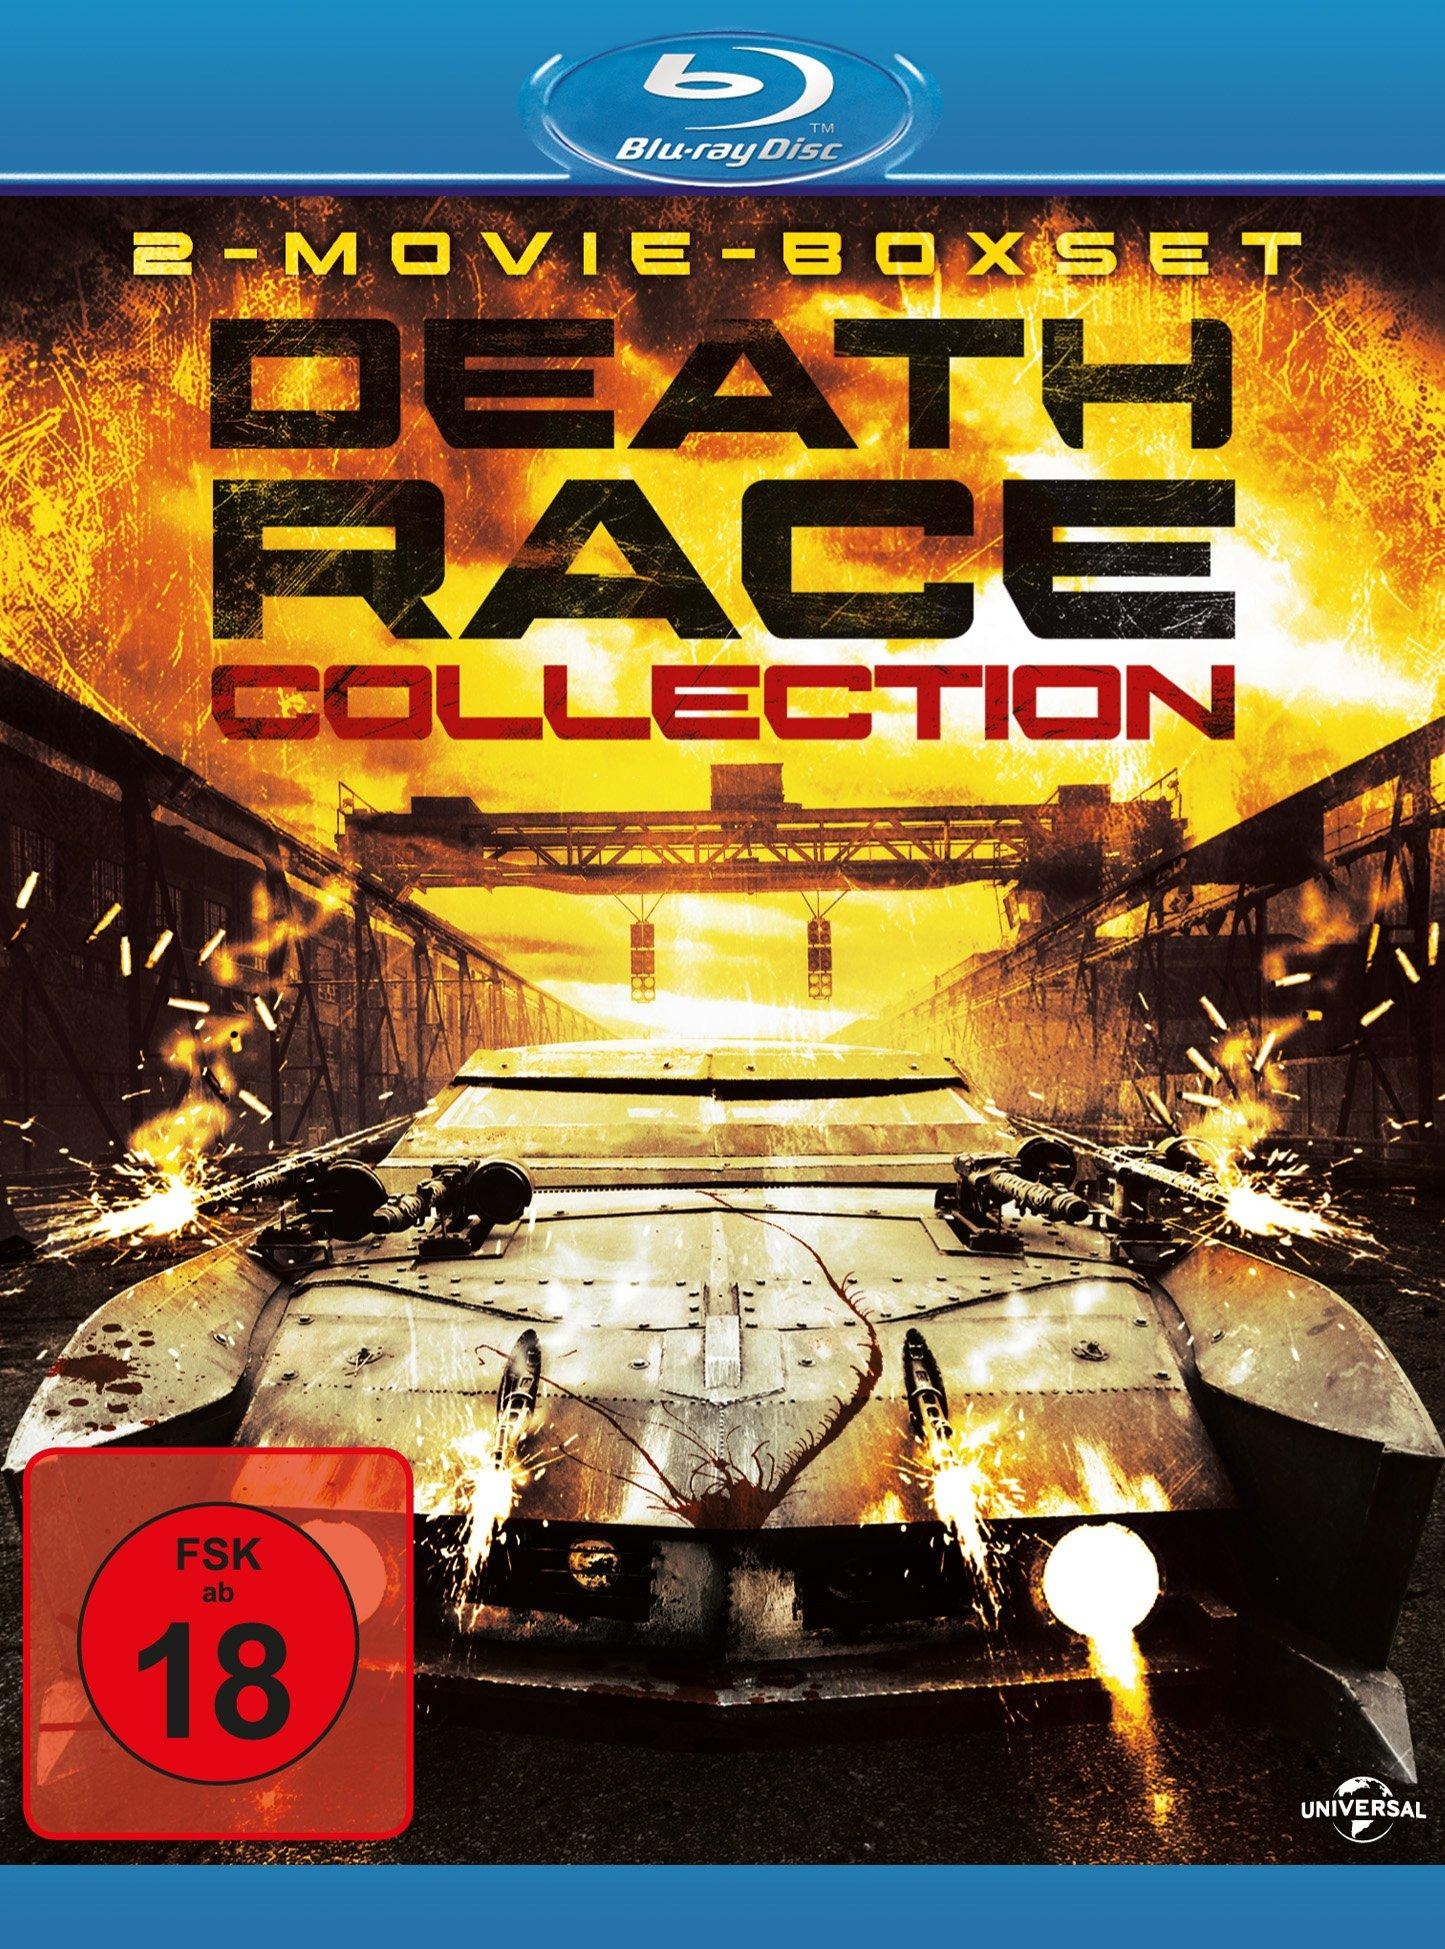 Death Race 1+2 Collection - 2 Movie Boxset [Blu-ray] (Neu differenzbesteuert)